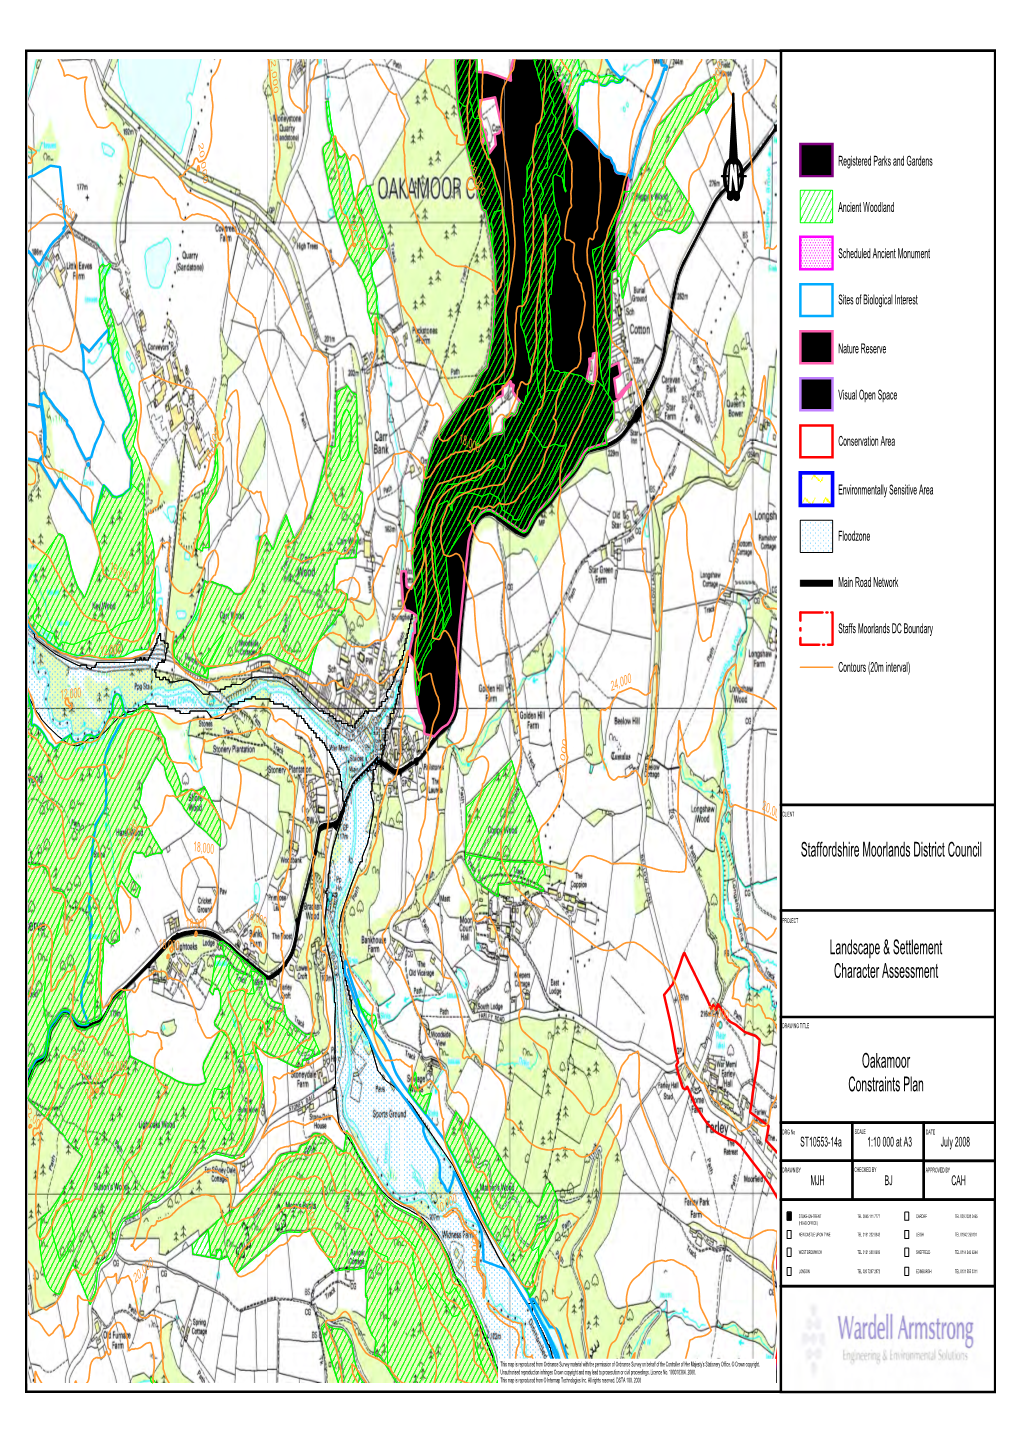 Staffordshire Moorlands District Council Landscape & Settlement Character Assessment Oakamoor Constraints Plan